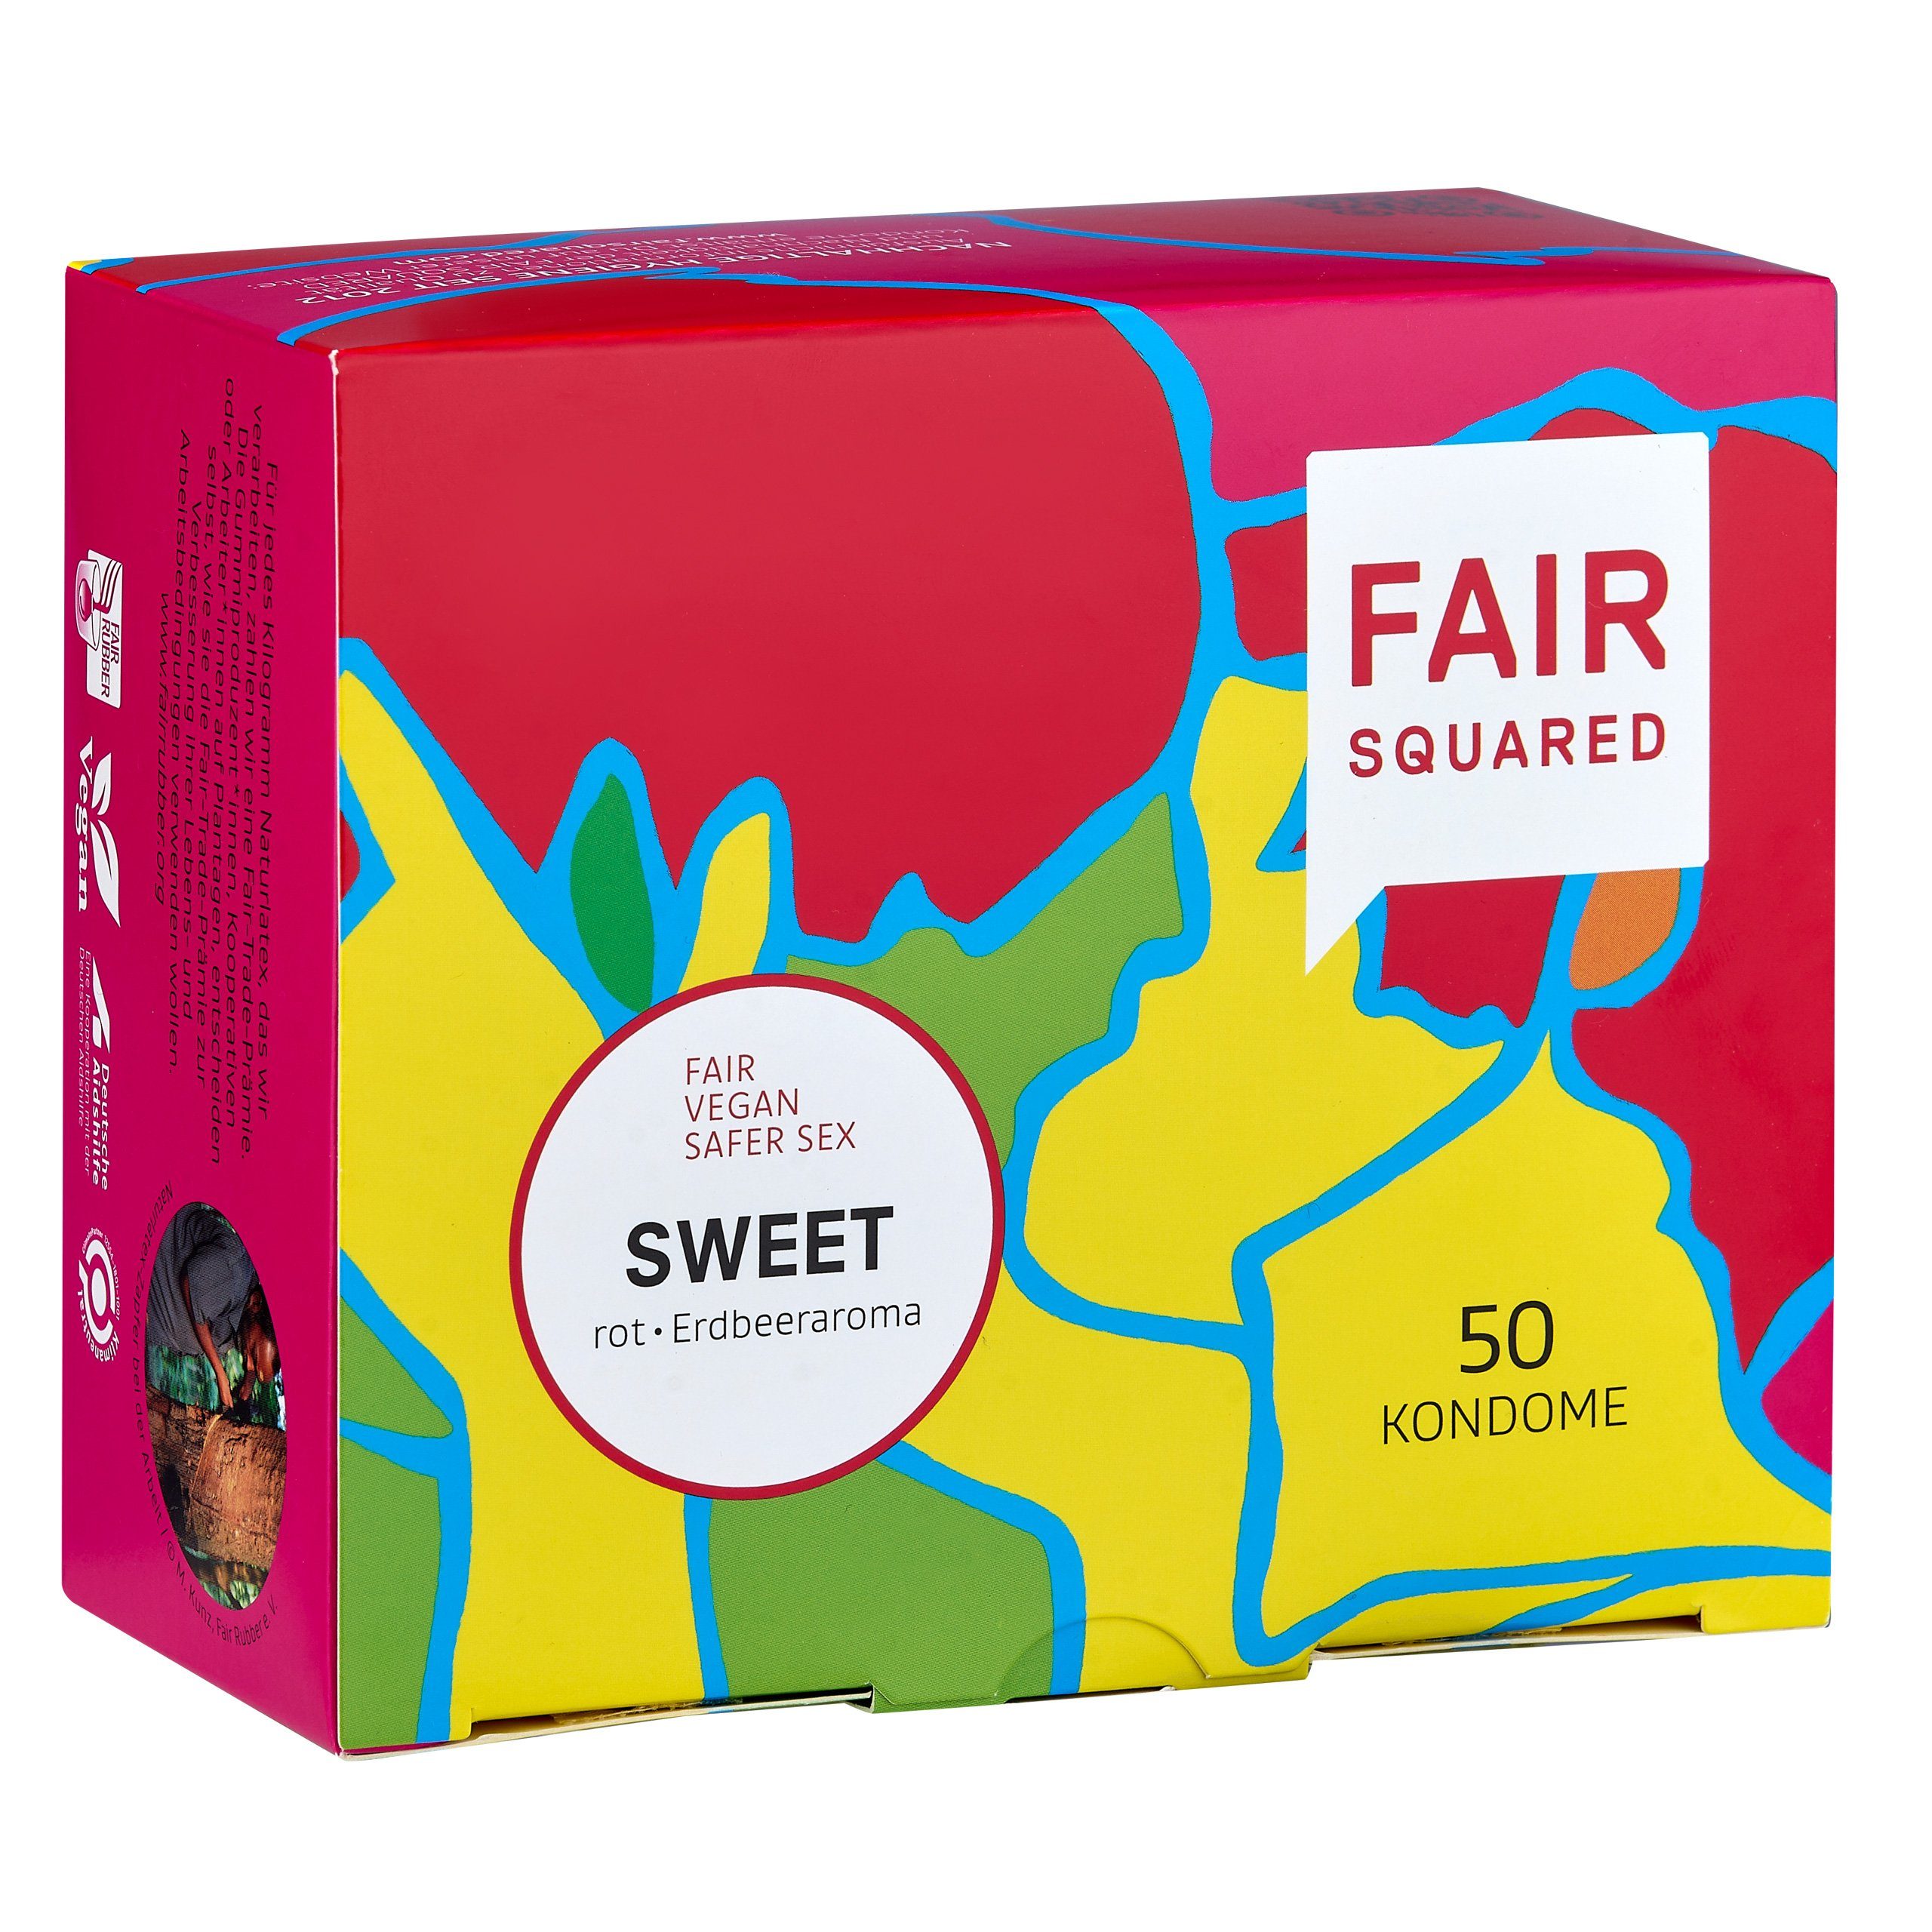 Kondome Erdbeergeschmack FAIR SWEET Fair Kondome Squared SQUARED